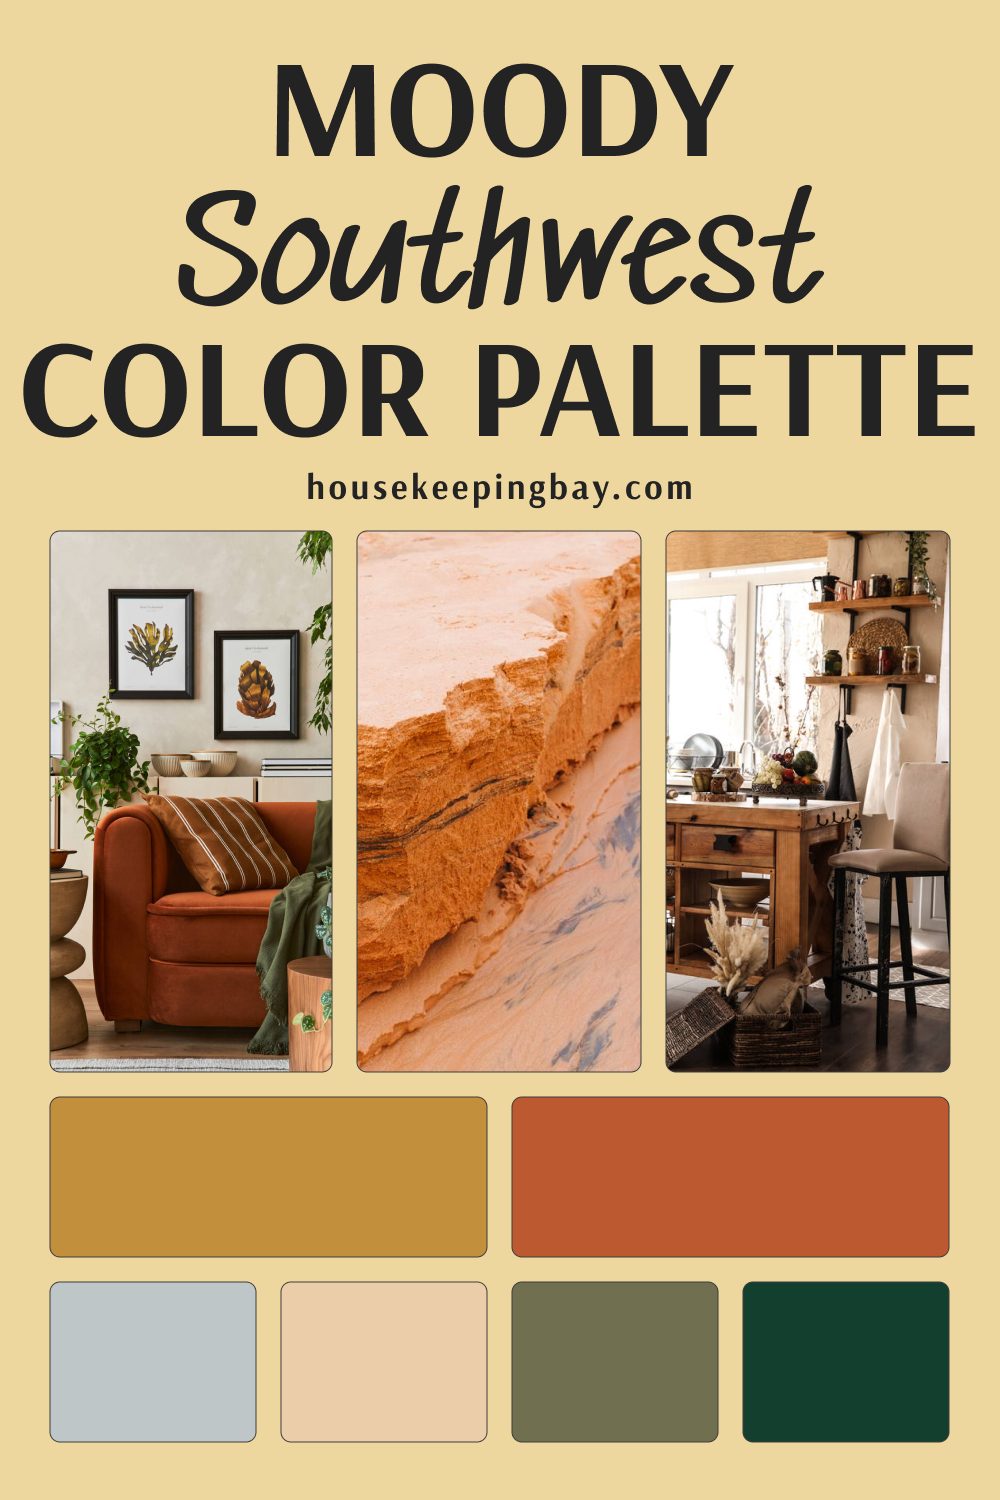 Moody Southwest Color Palette